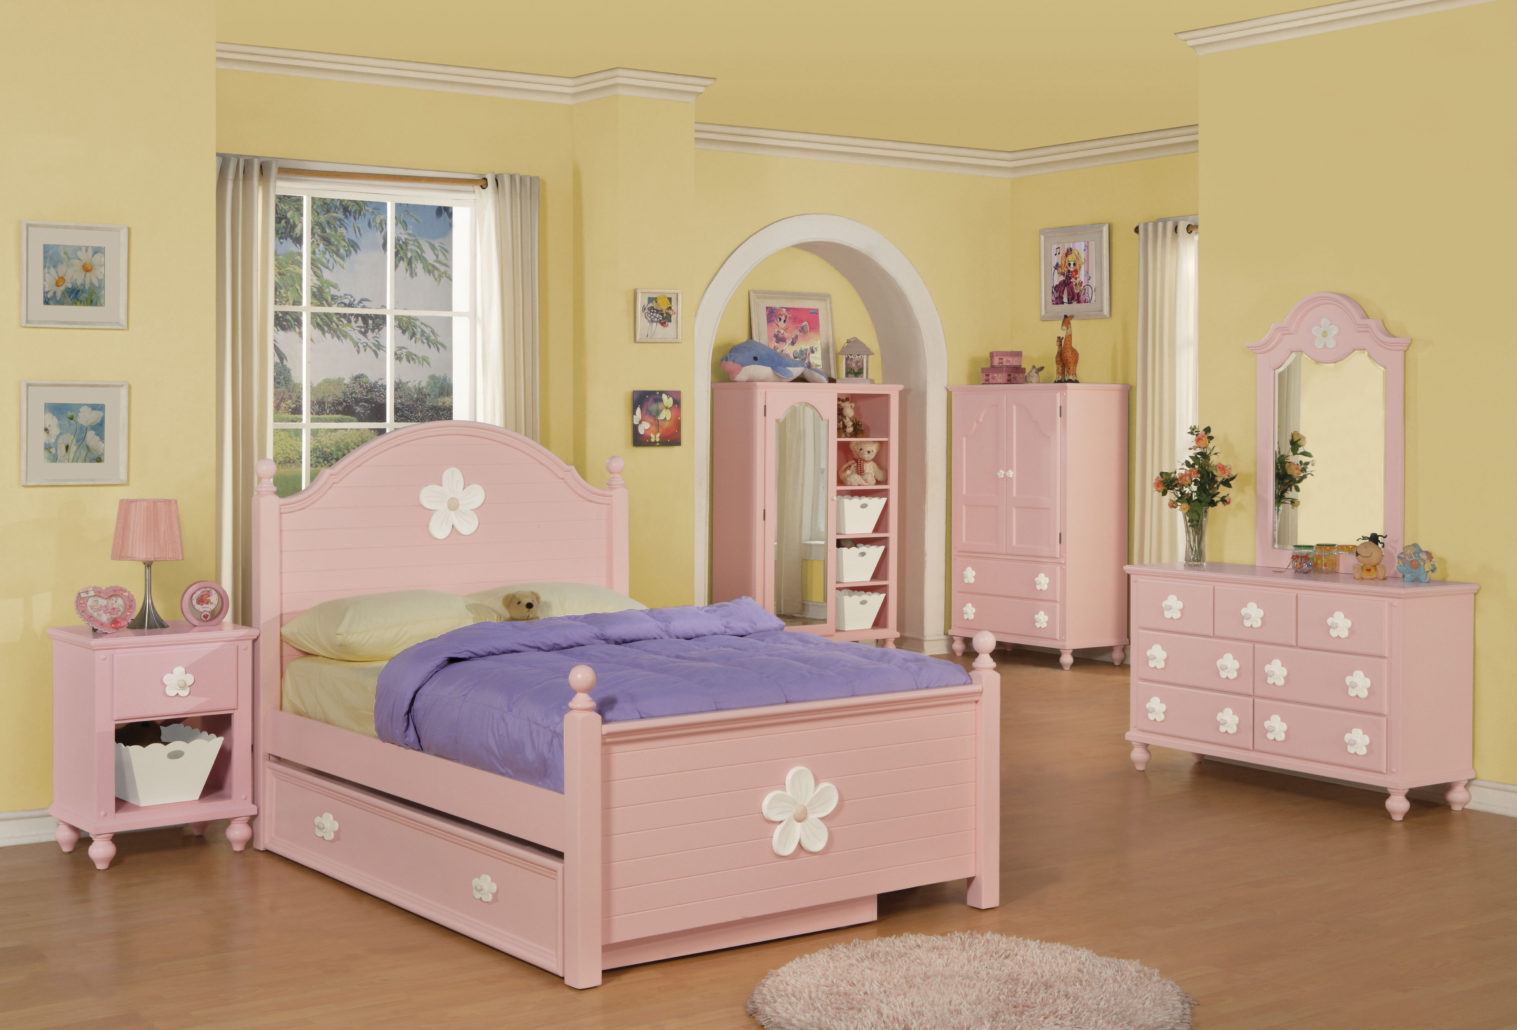 inexpensive bedroom furniture for kids